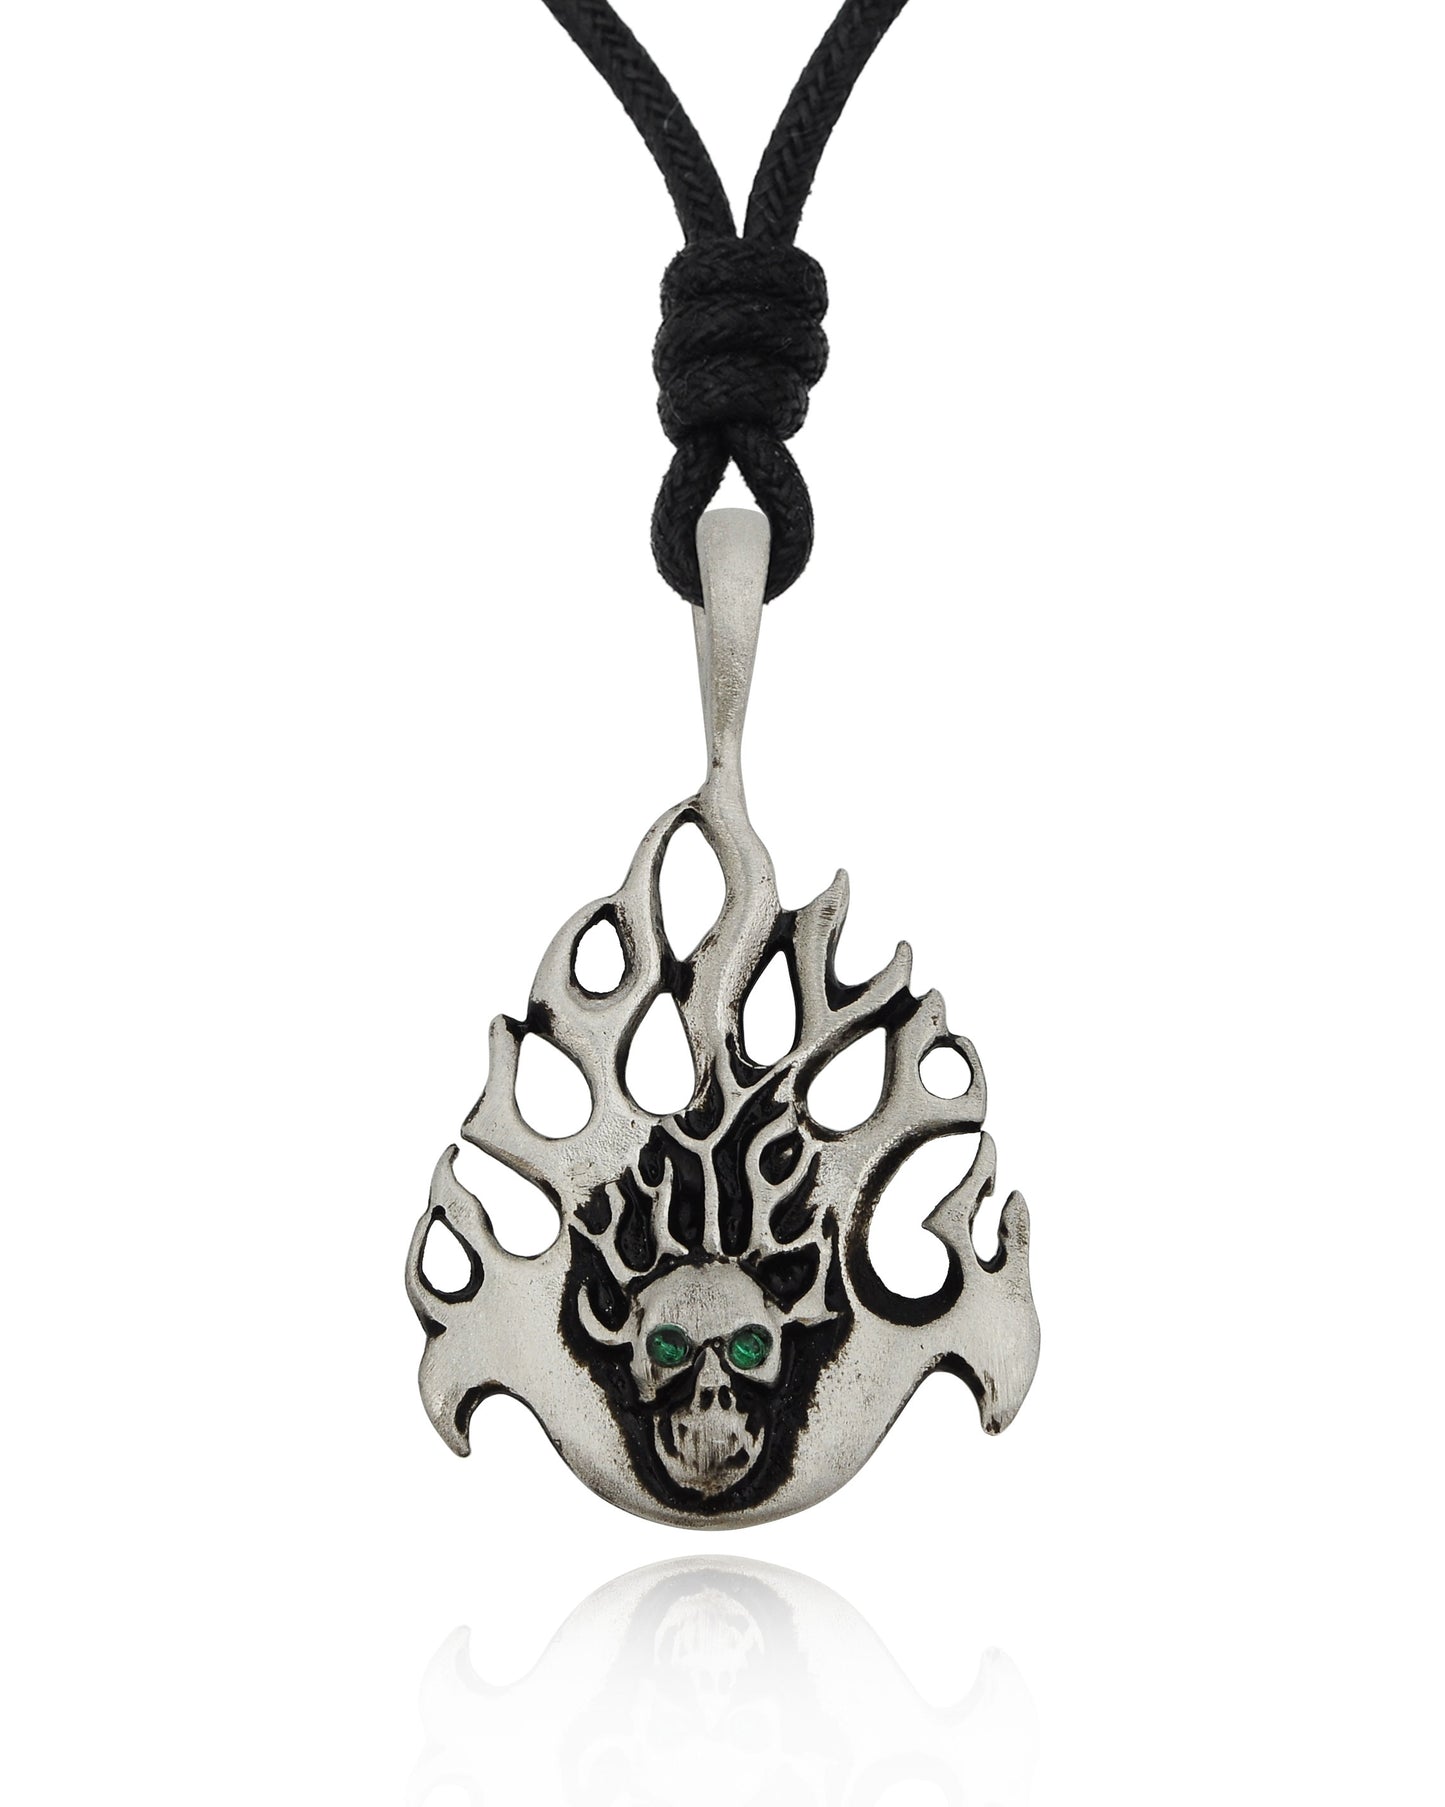 Fire Skull Head Handmade Silver Pewter Brass Necklace Pendant Jewelry